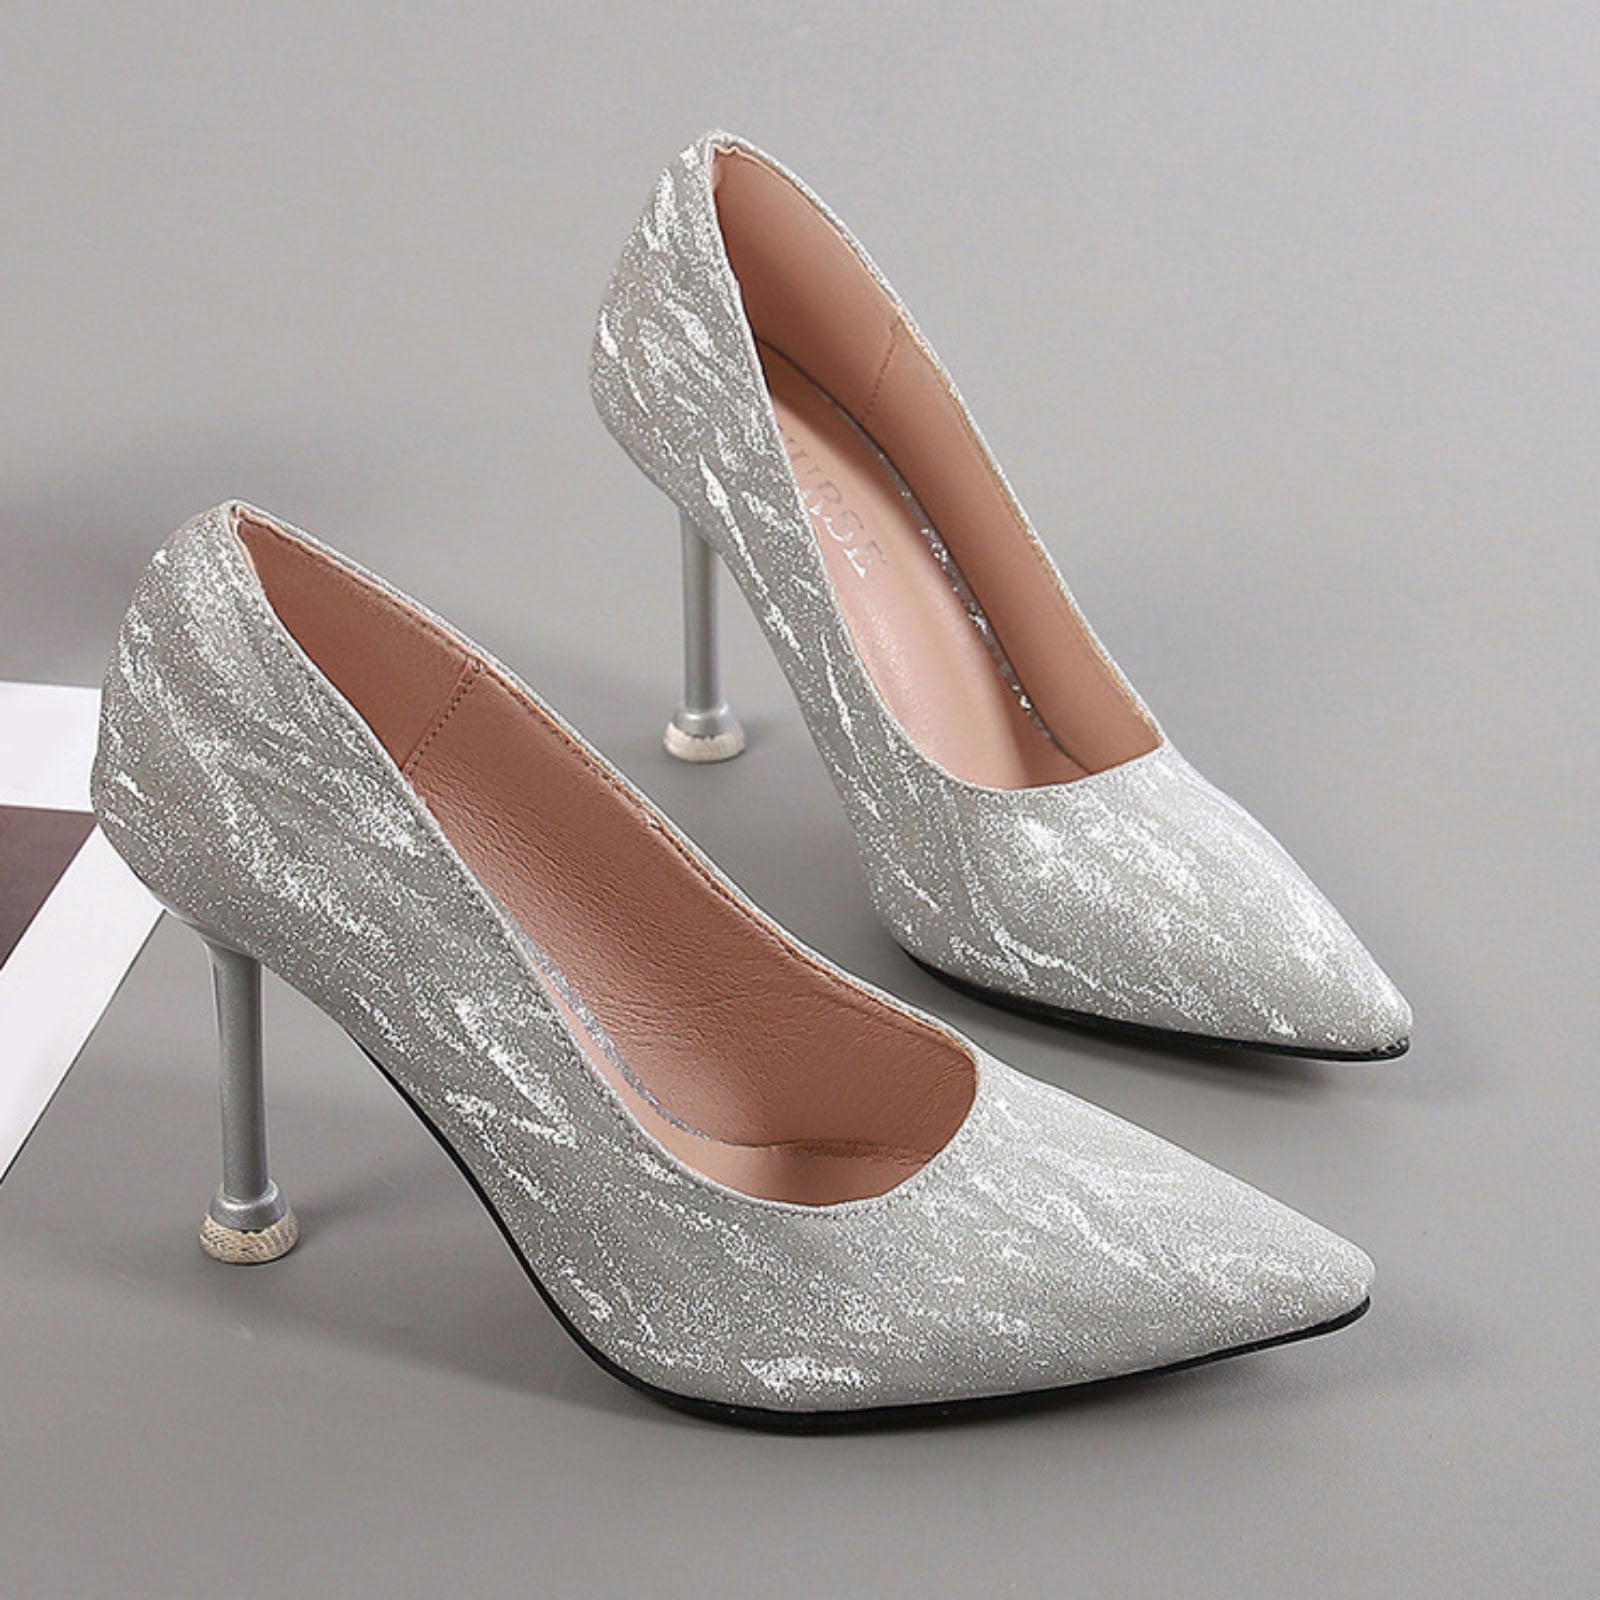 shoes women high heels size 11 | eBay